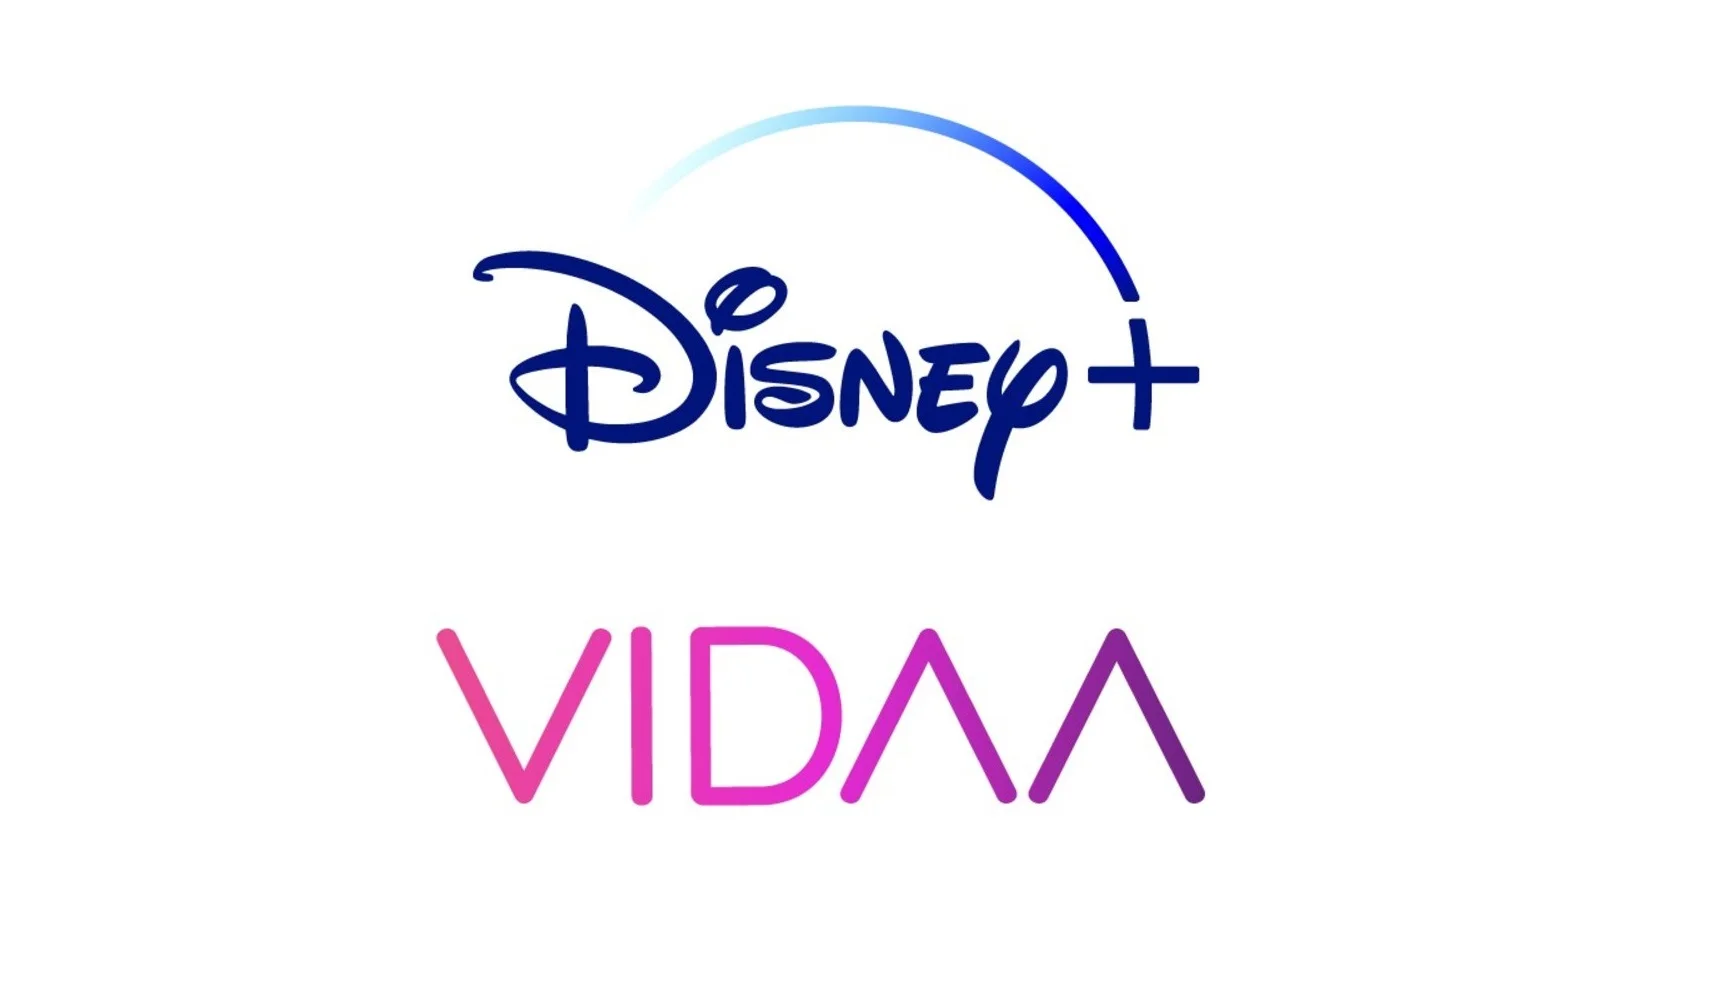 Disney+ VIDAA Smart